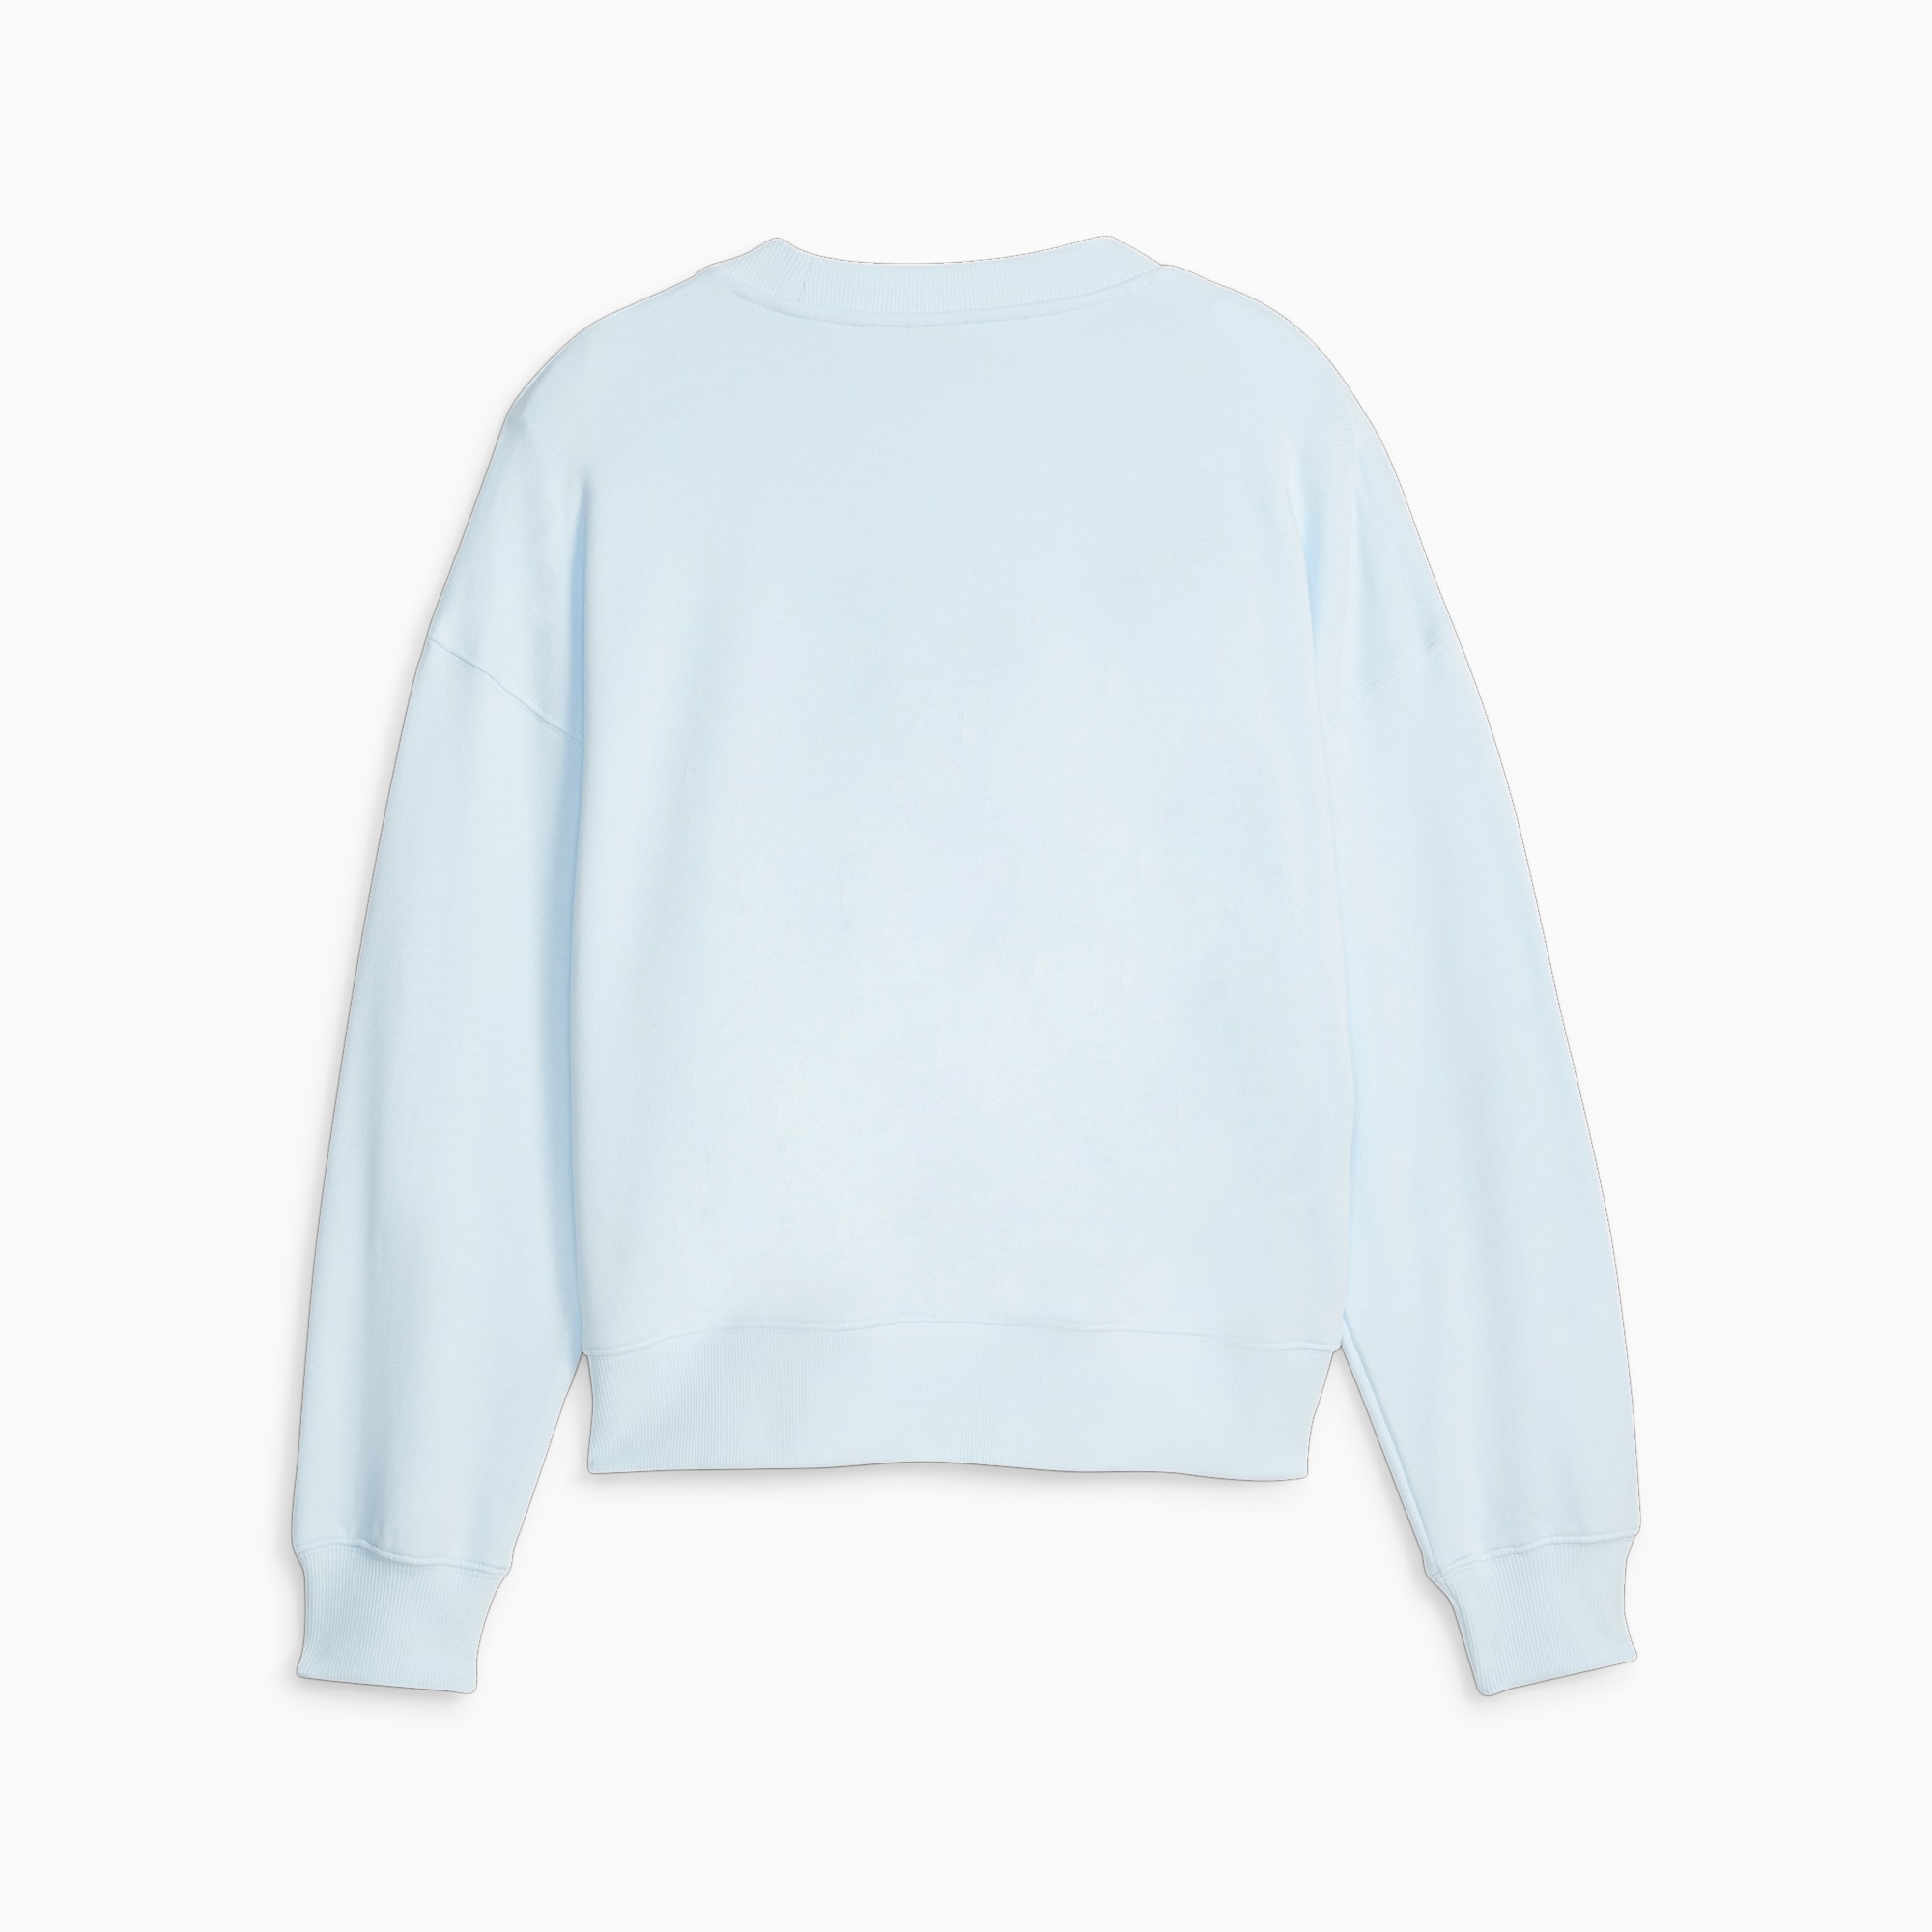 PUMA Classics Women's Oversized Sweatshirt, Icy Blue, Size M, Clothing